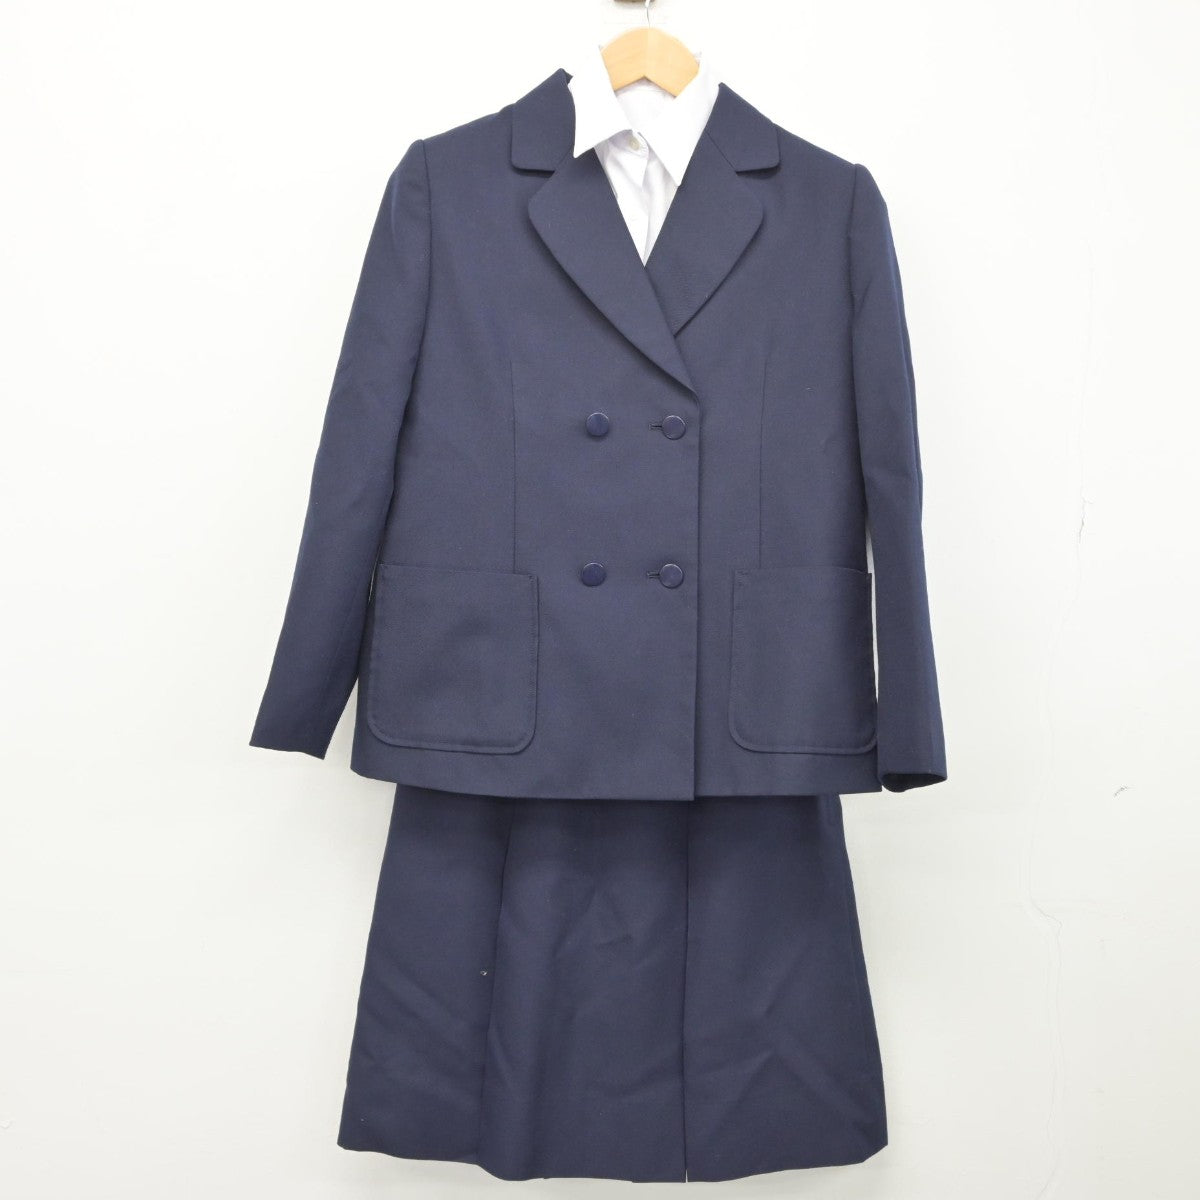 公立 女子 制服 セット 中学 高校 神奈川県 横浜市 - コスプレ